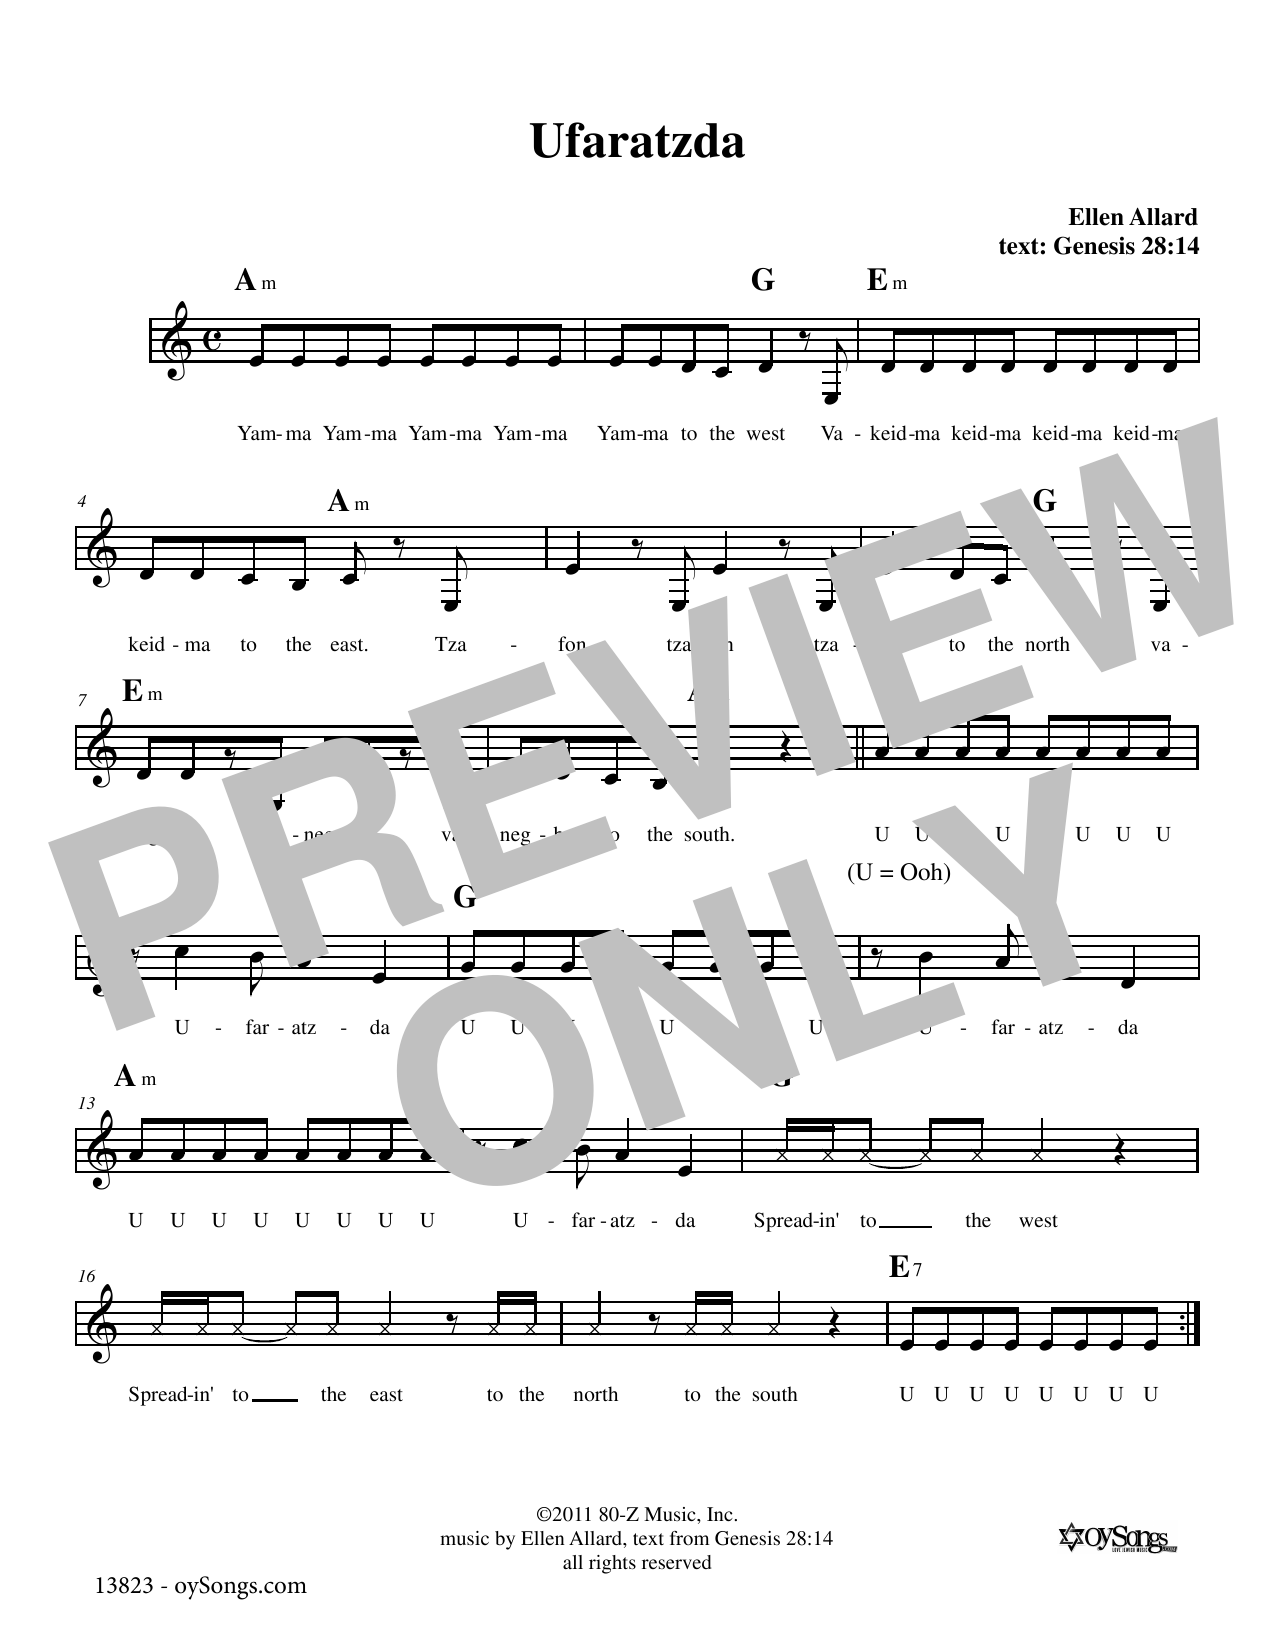 Download Ellen Allard Ufaratzda Sheet Music and learn how to play Melody Line, Lyrics & Chords PDF digital score in minutes